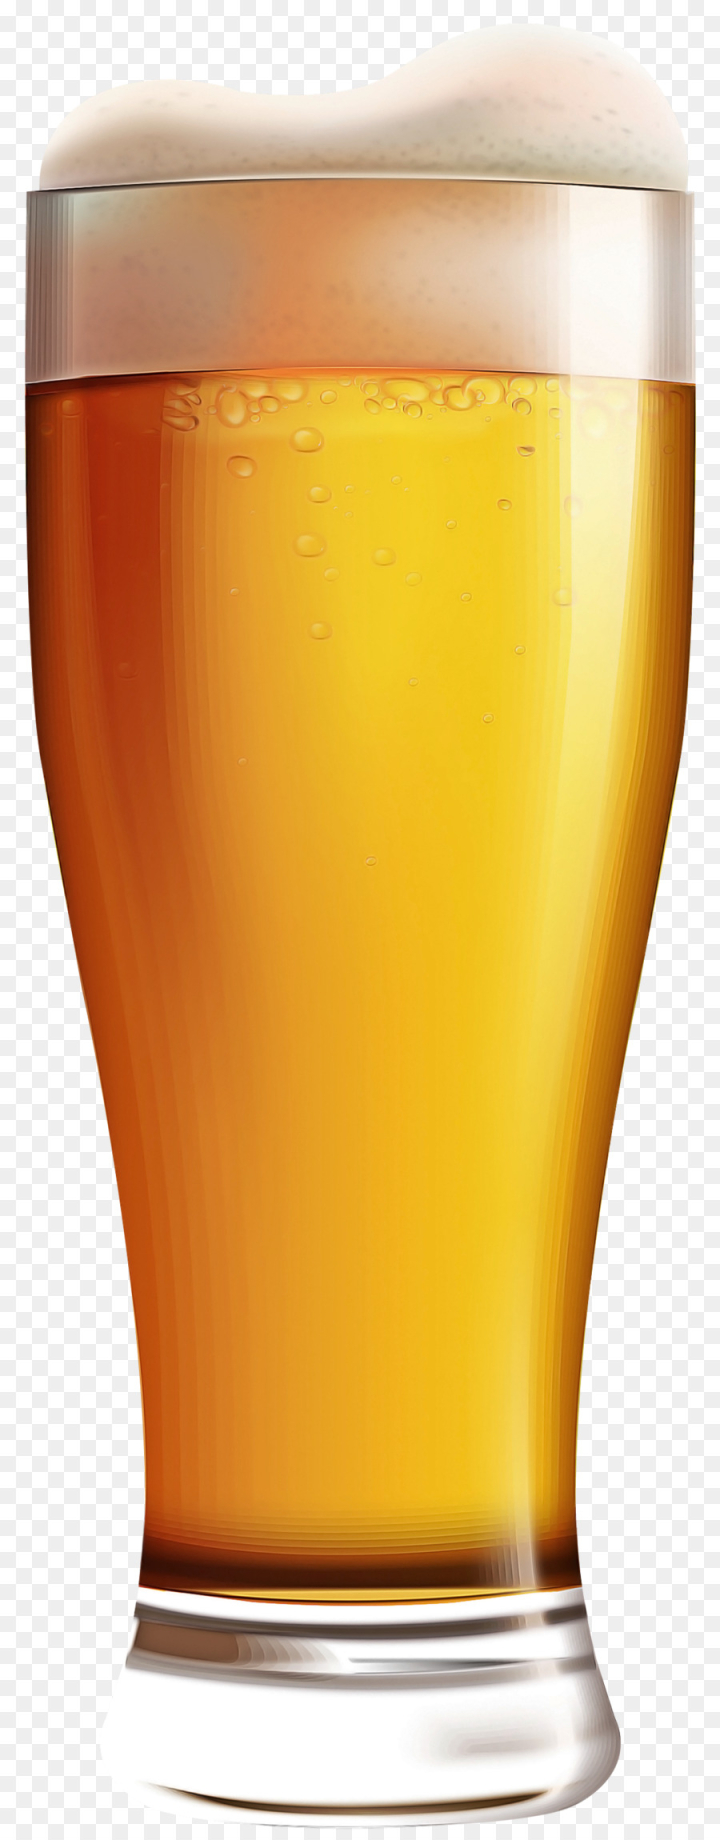 beer glass,pint glass,drink,juice,yellow,orange drink,wheat beer,orange juice,alcoholic beverage,nonalcoholic beverage,png